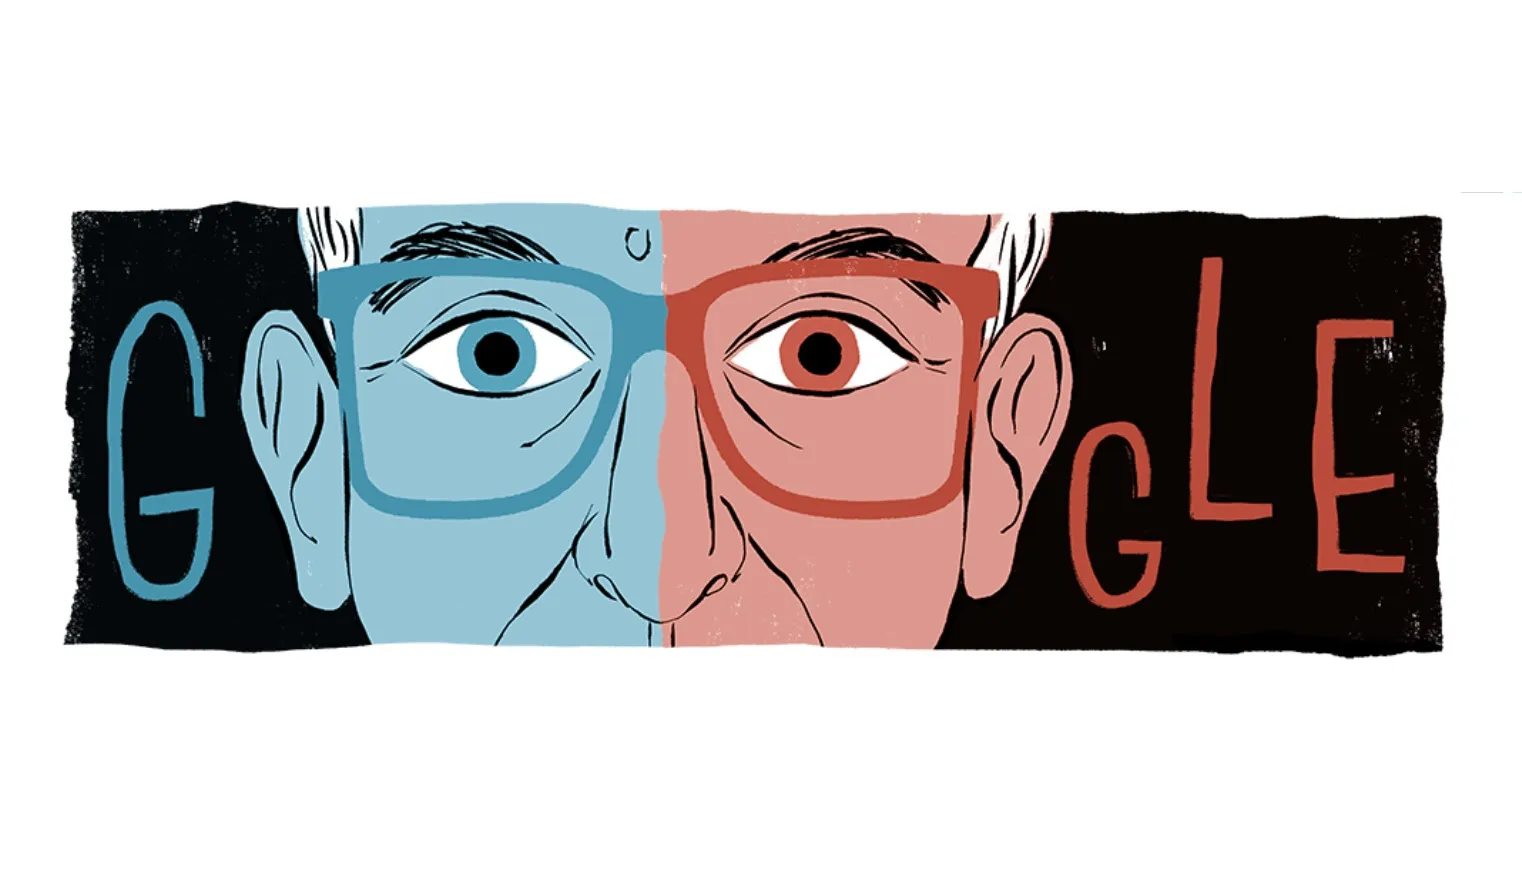 Doodle Google, Krzysztof Kieślowski, chúc mừng sinh nhật 